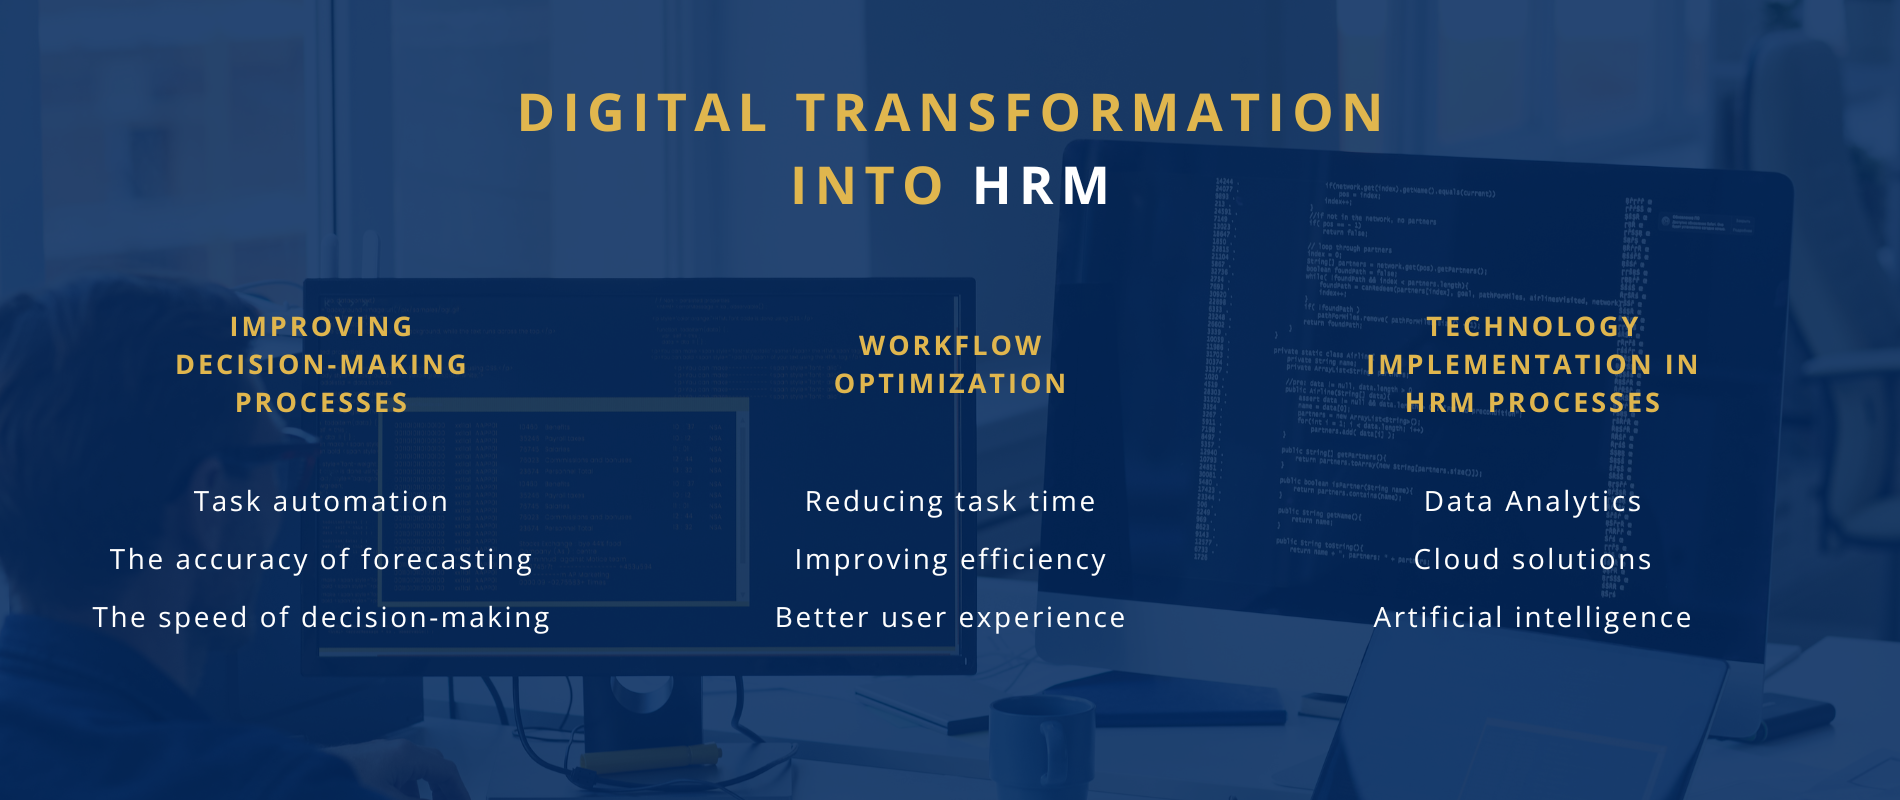 Digital transformation into HRM